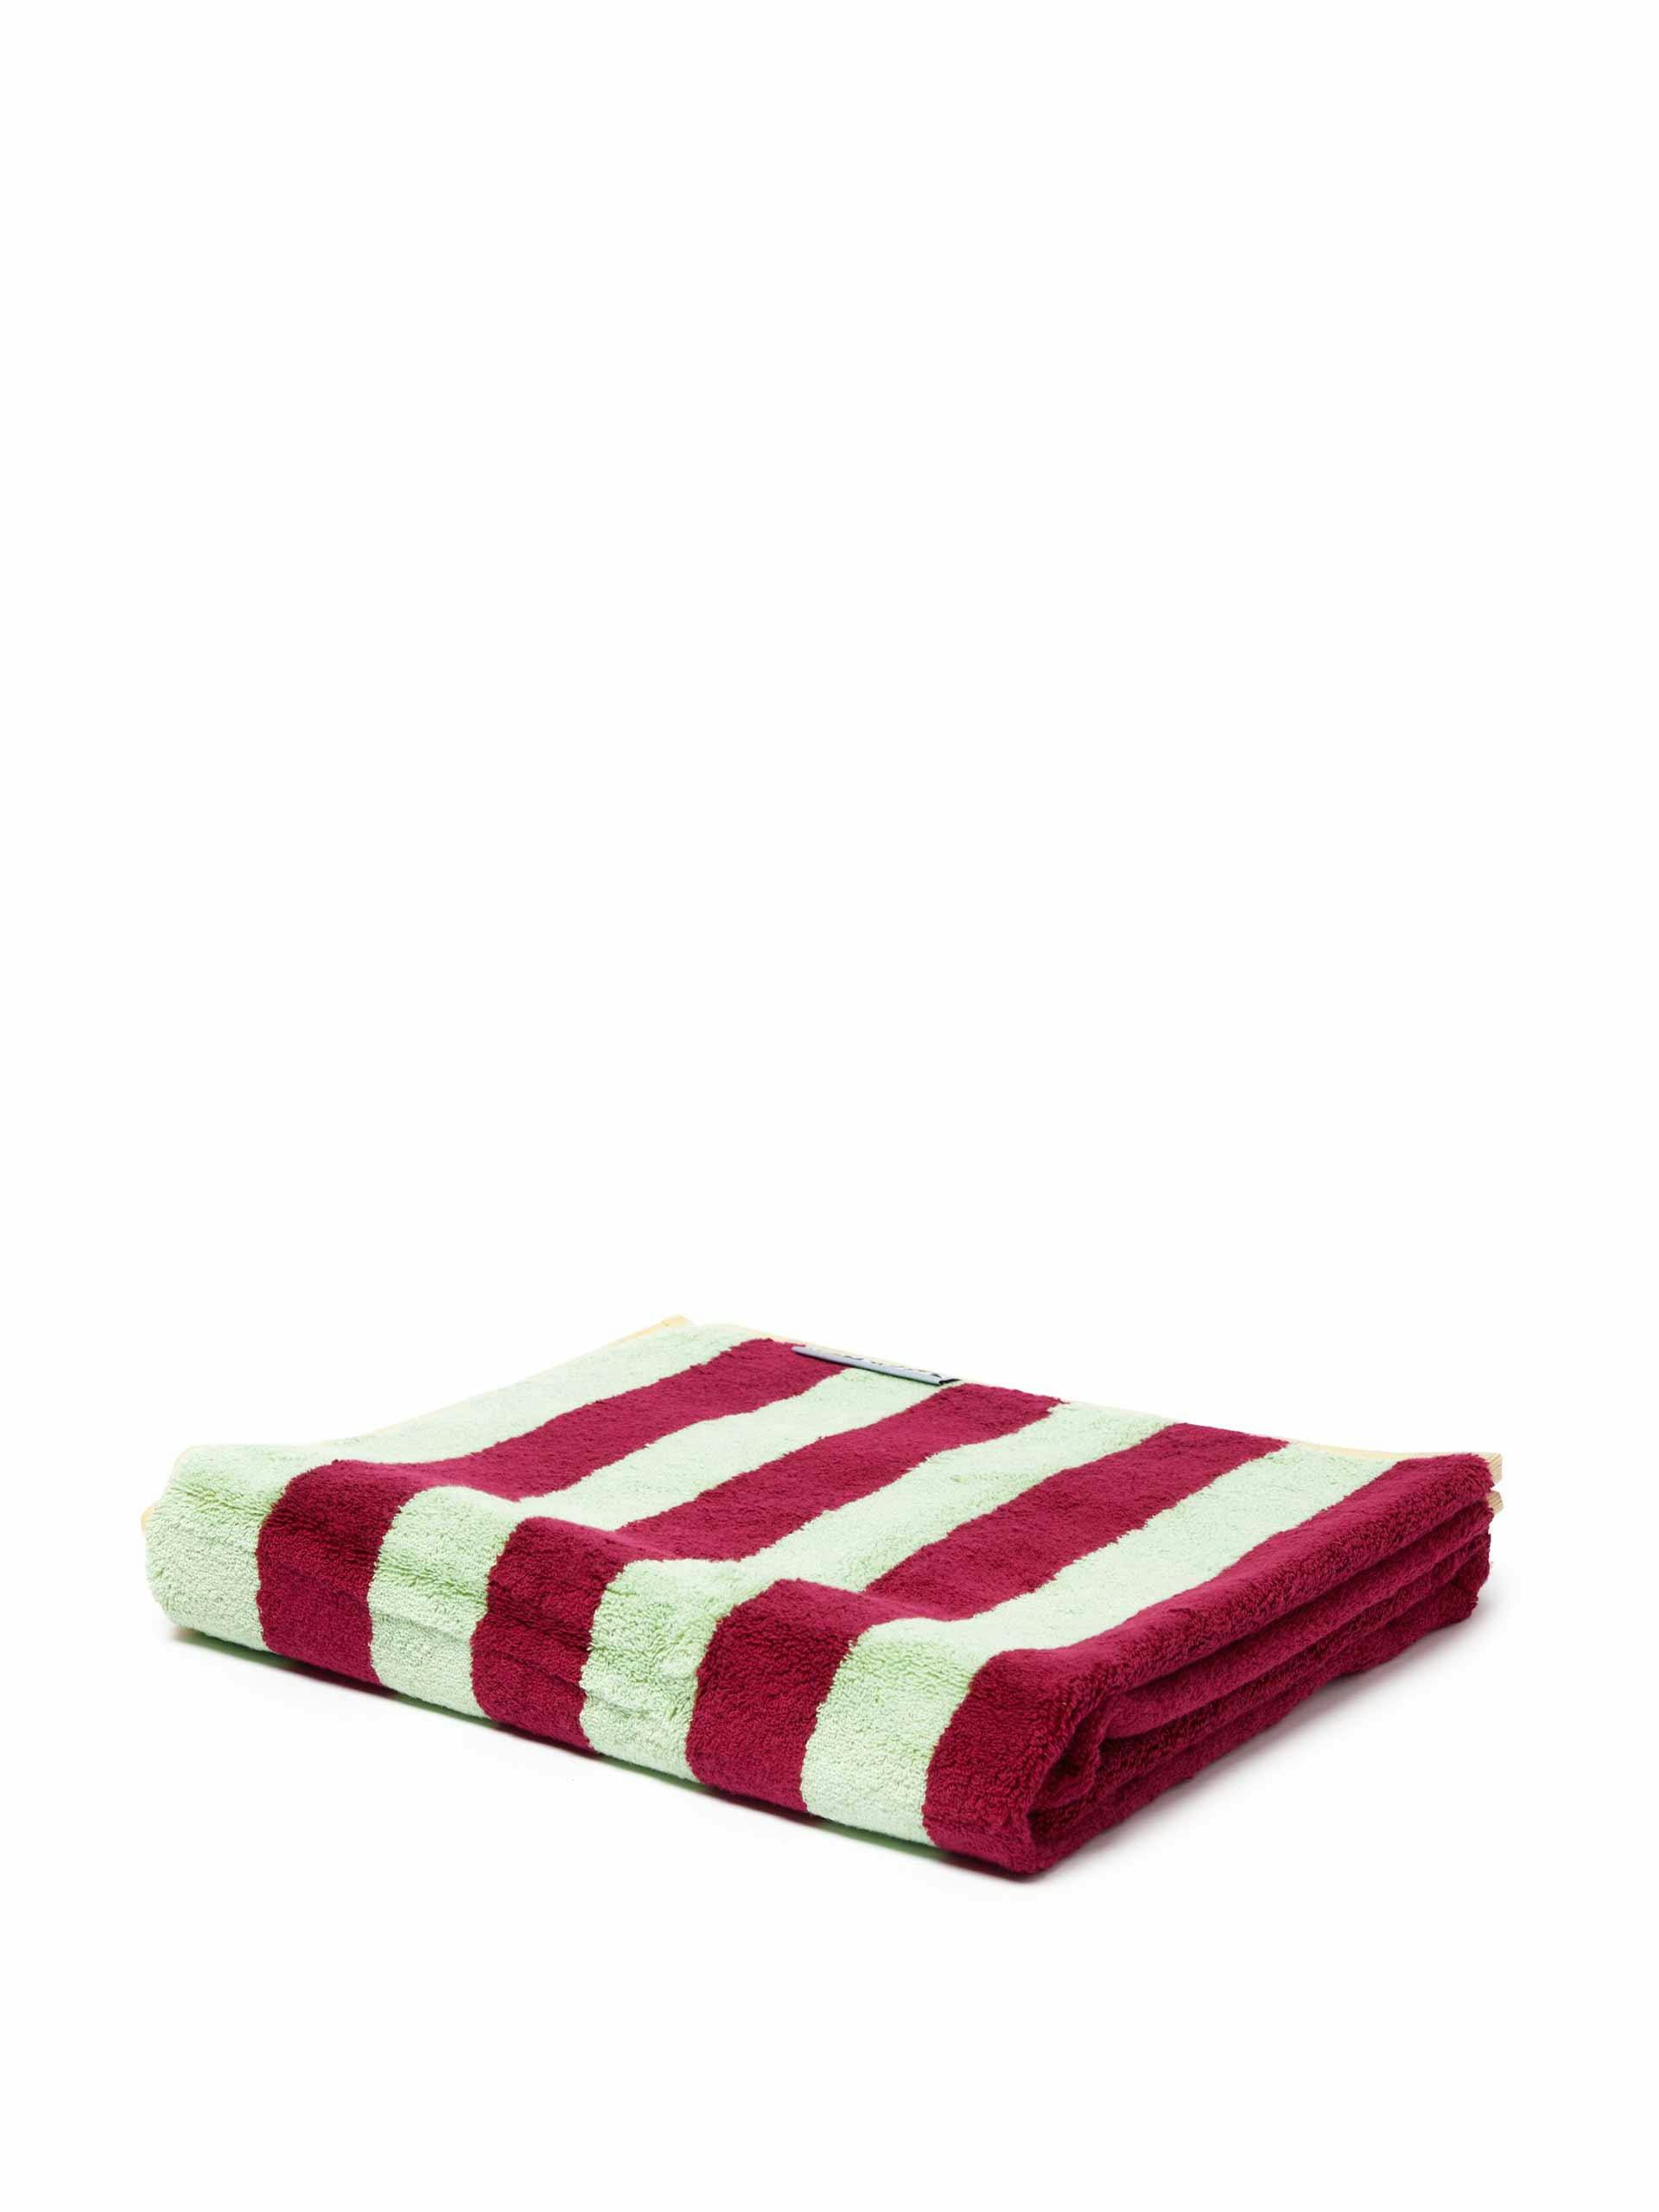 Striped bath towel